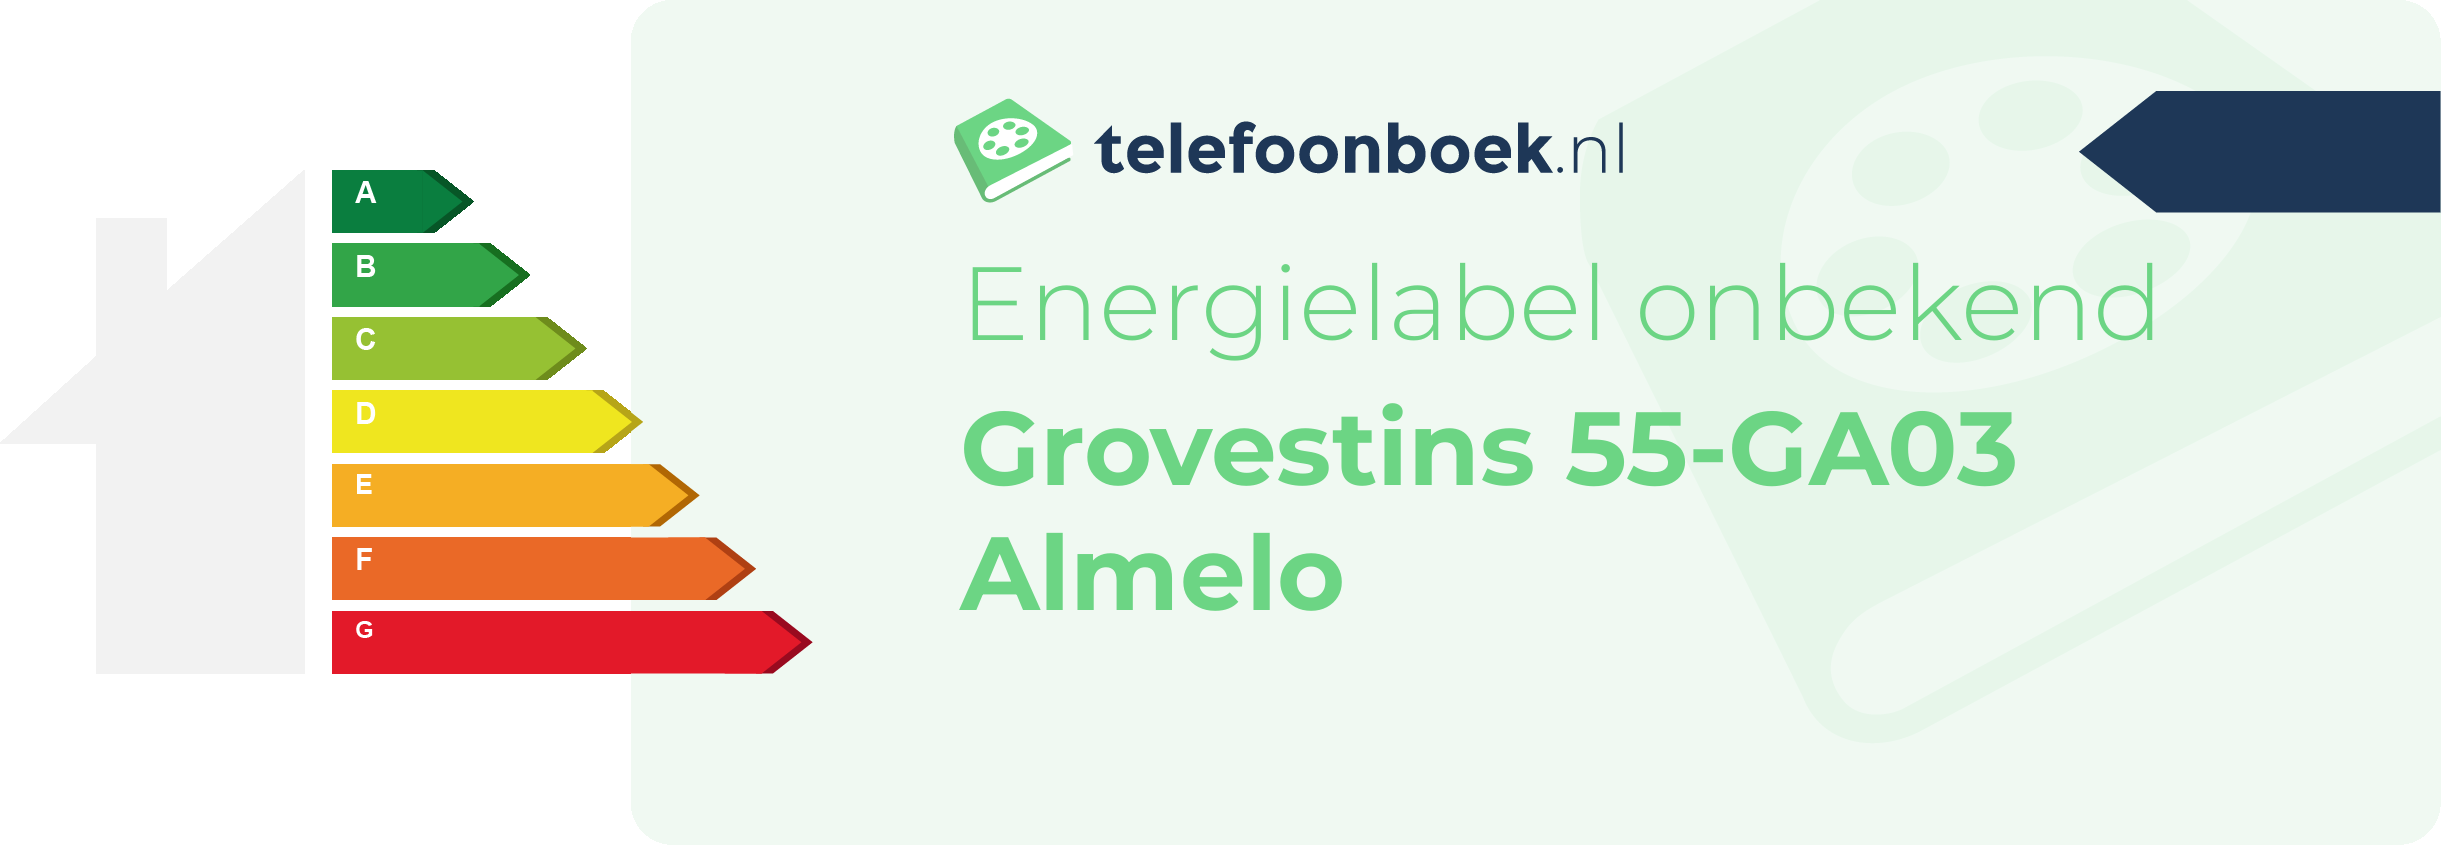 Energielabel Grovestins 55-GA03 Almelo